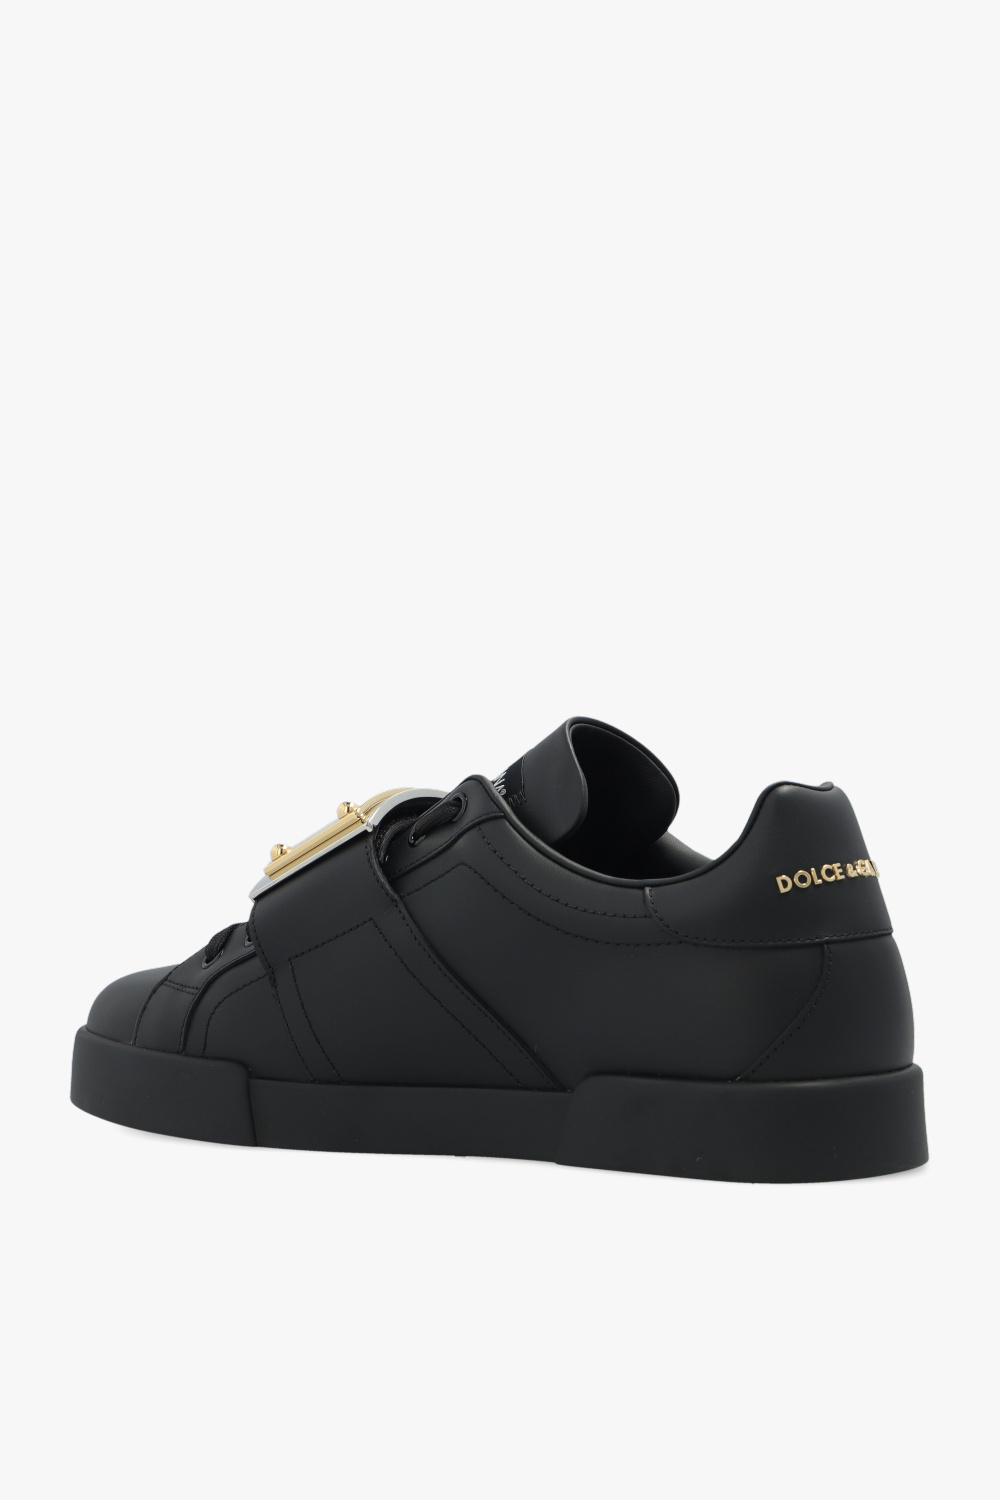 Dolce & Gabbana button-embellished rollneck jumper ‘Portofino’ sneakers